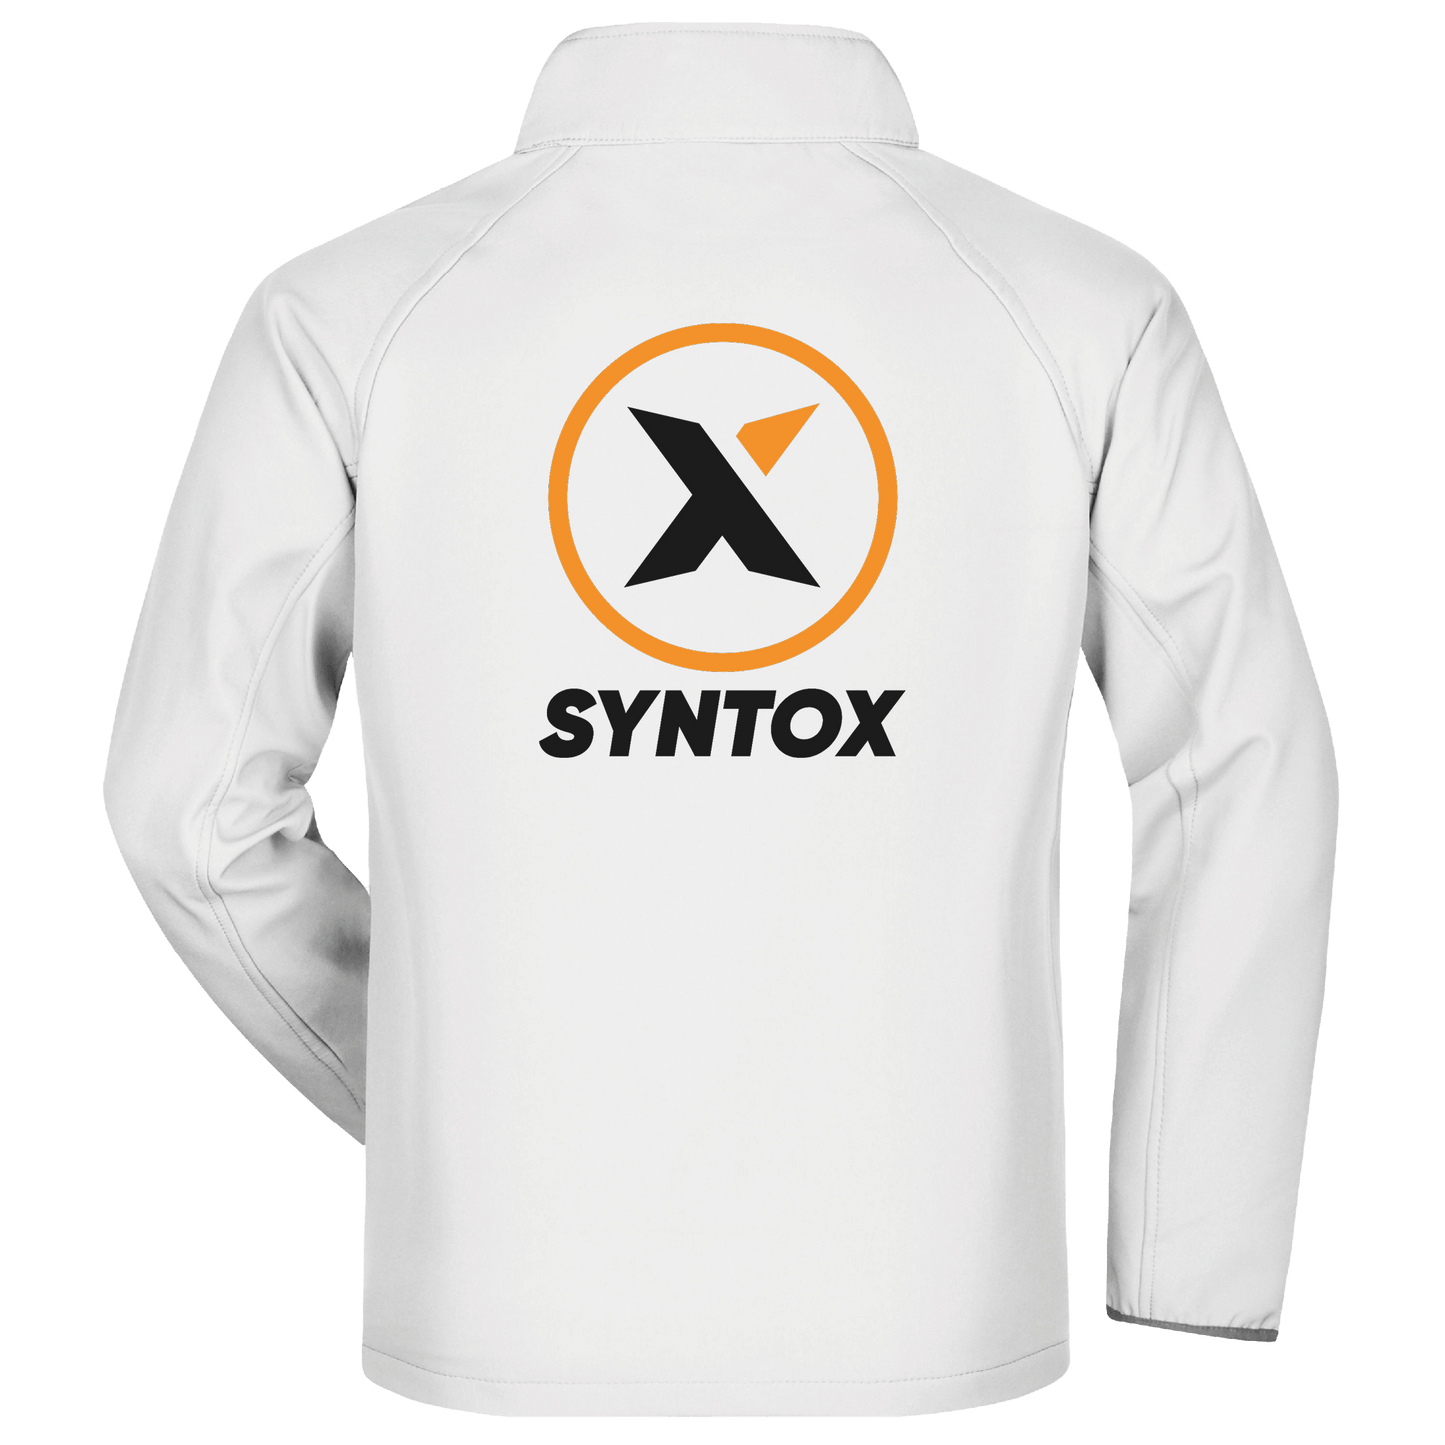 Jakke - Voksen - Syntox